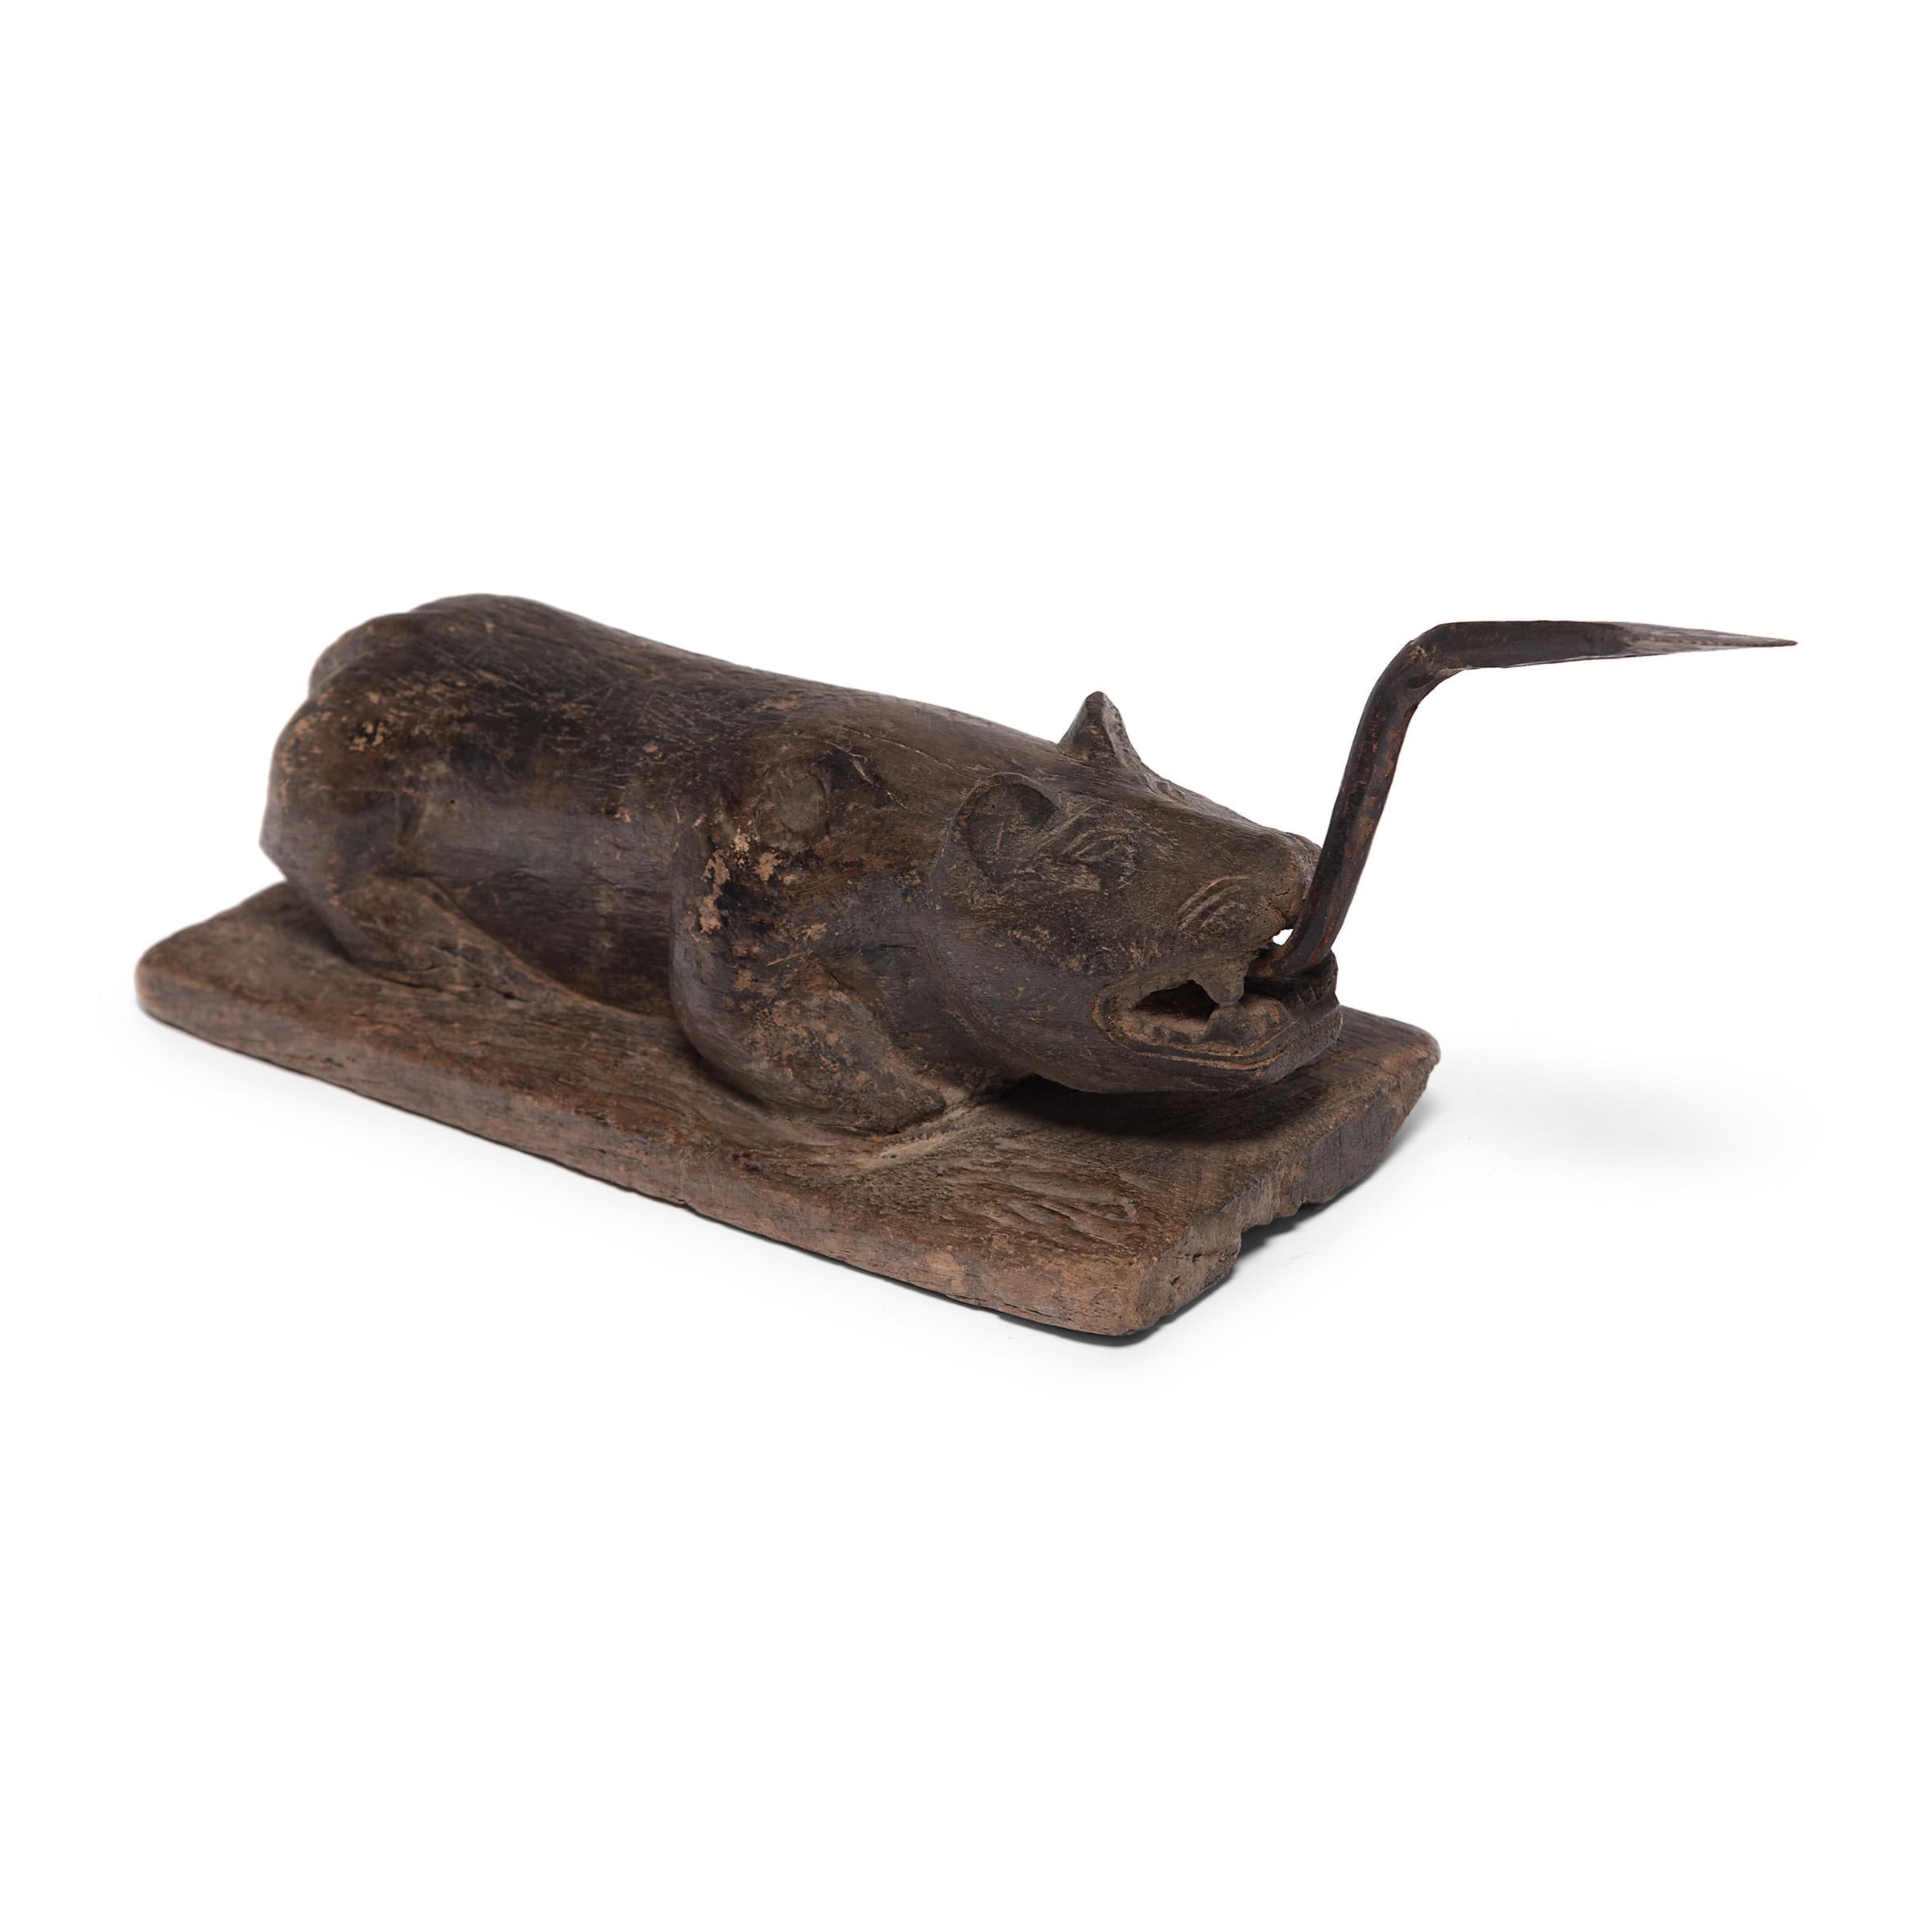 Primitive Mythical Beast Coconut Splitter, c. 1900 For Sale